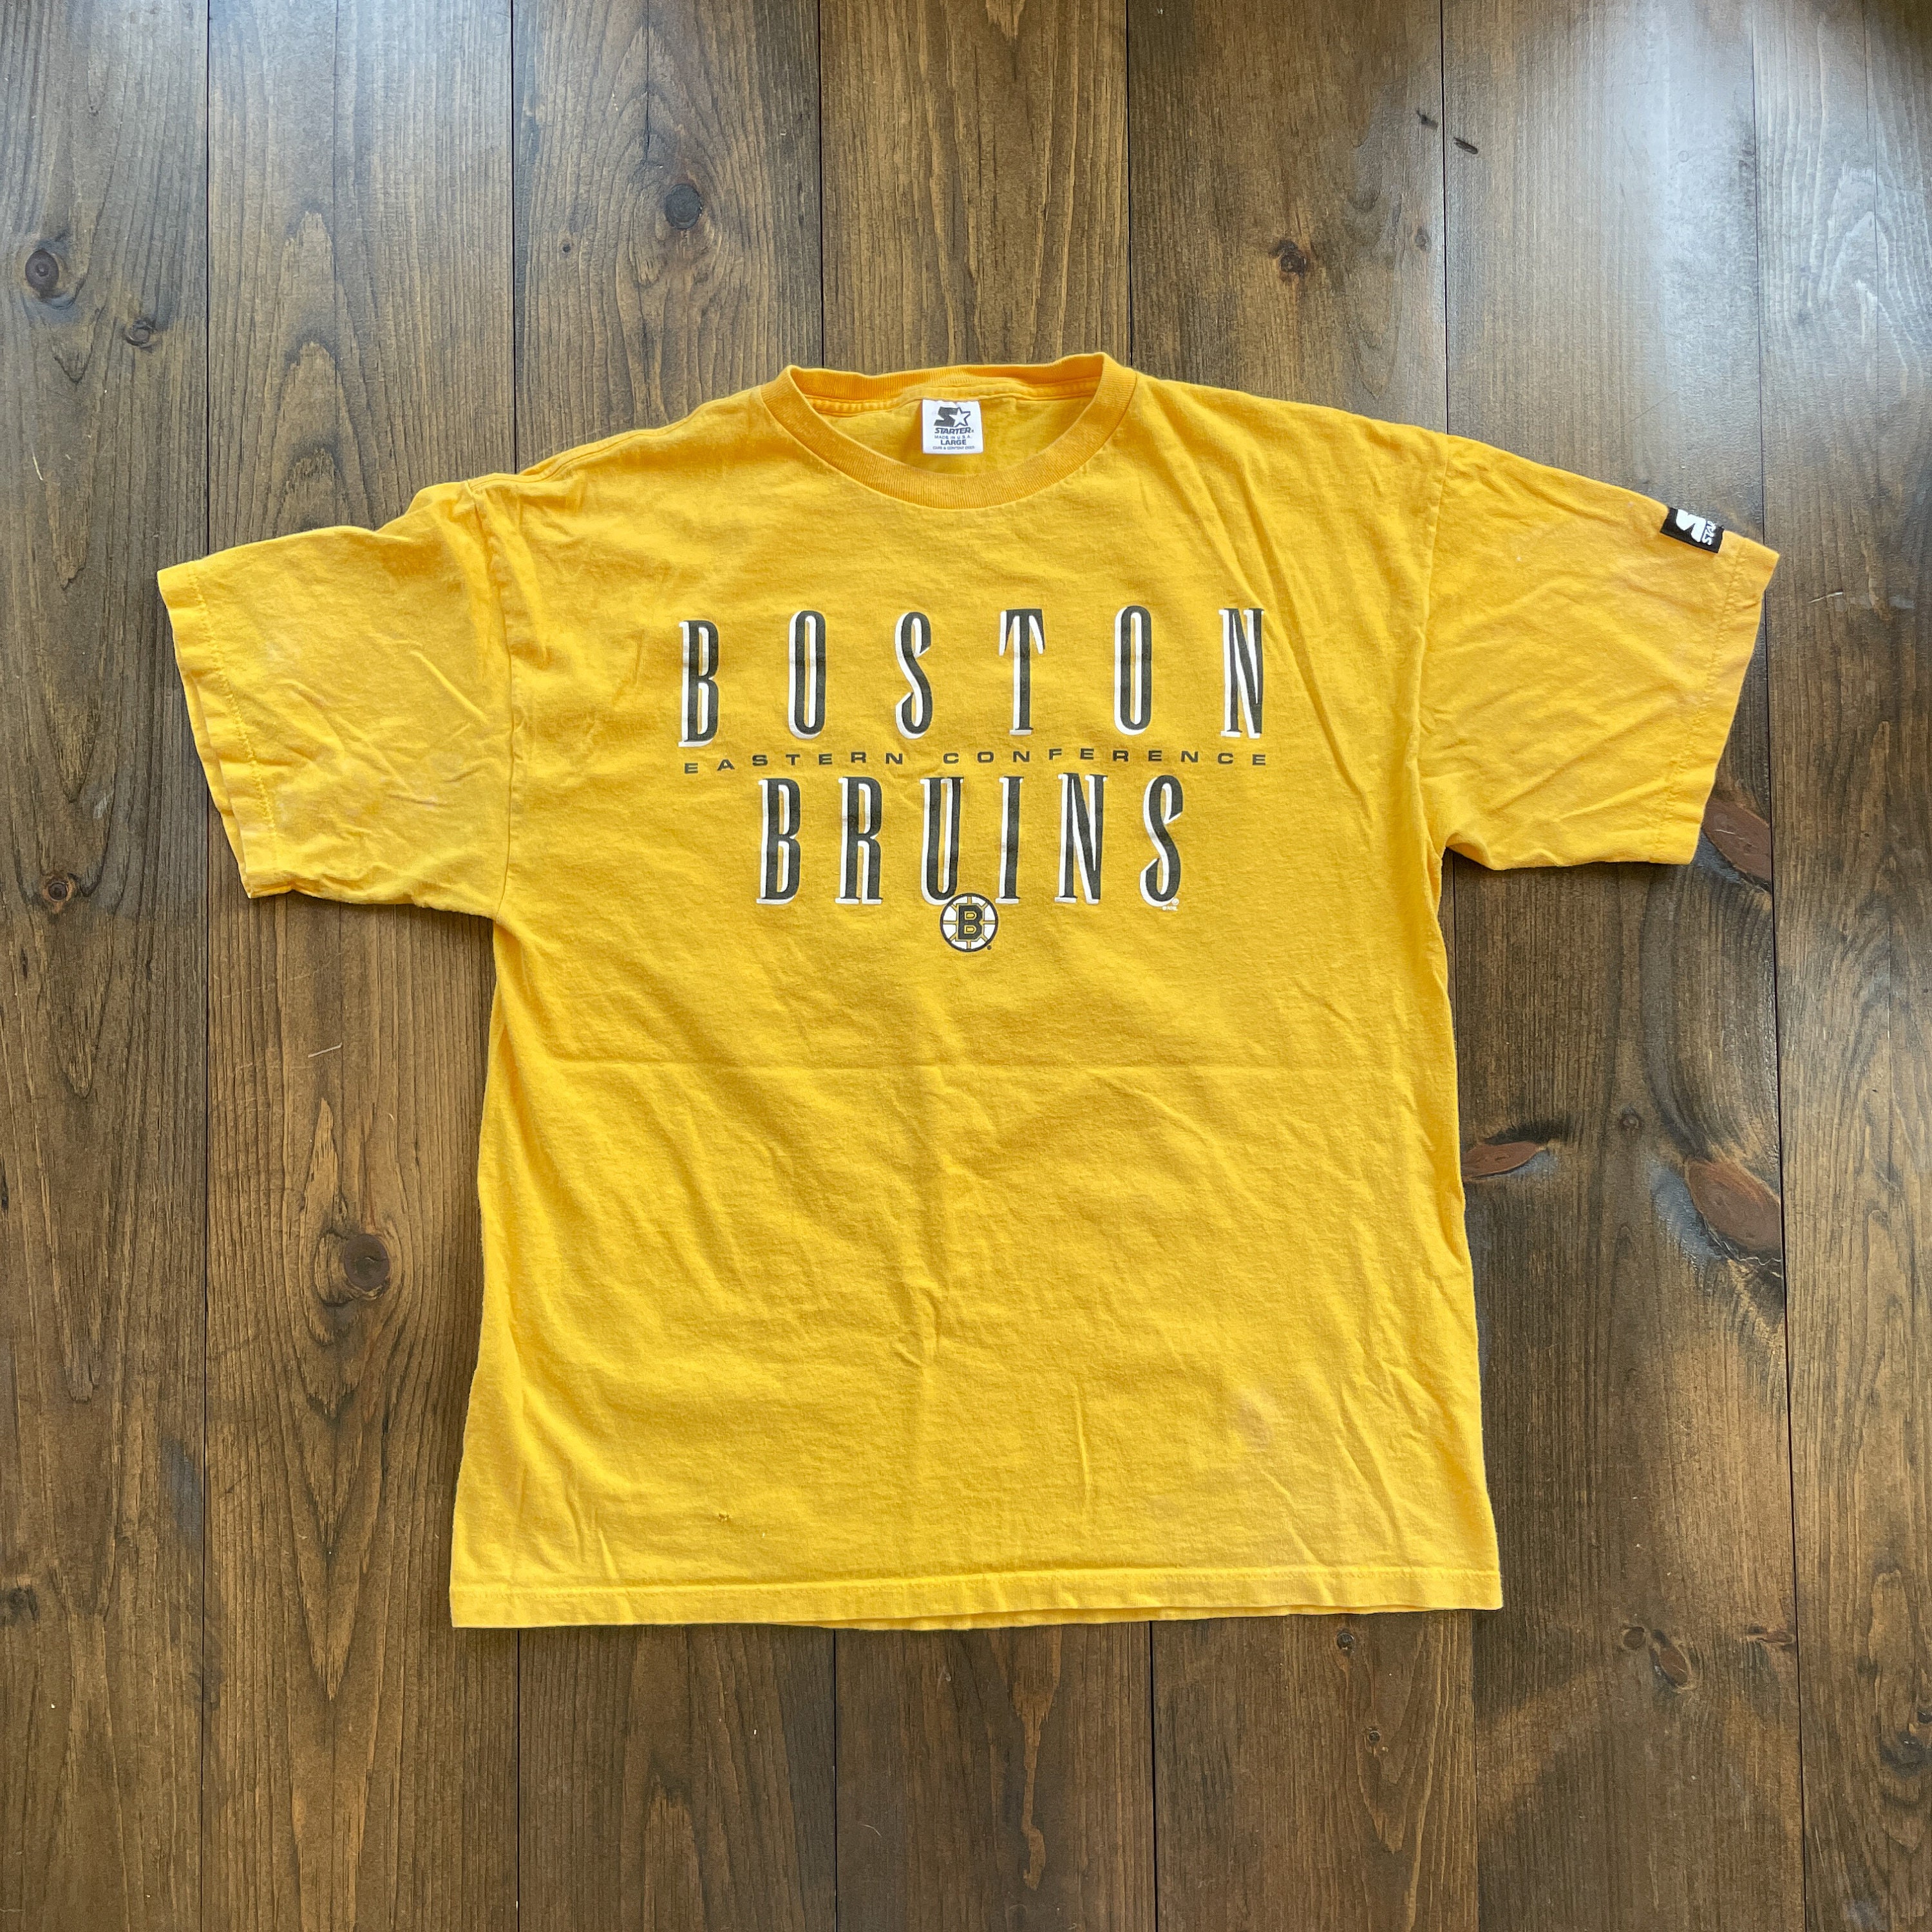 Original boston Bruins hockey club est 1924 bear Classic T-shirt, hoodie,  sweater, long sleeve and tank top